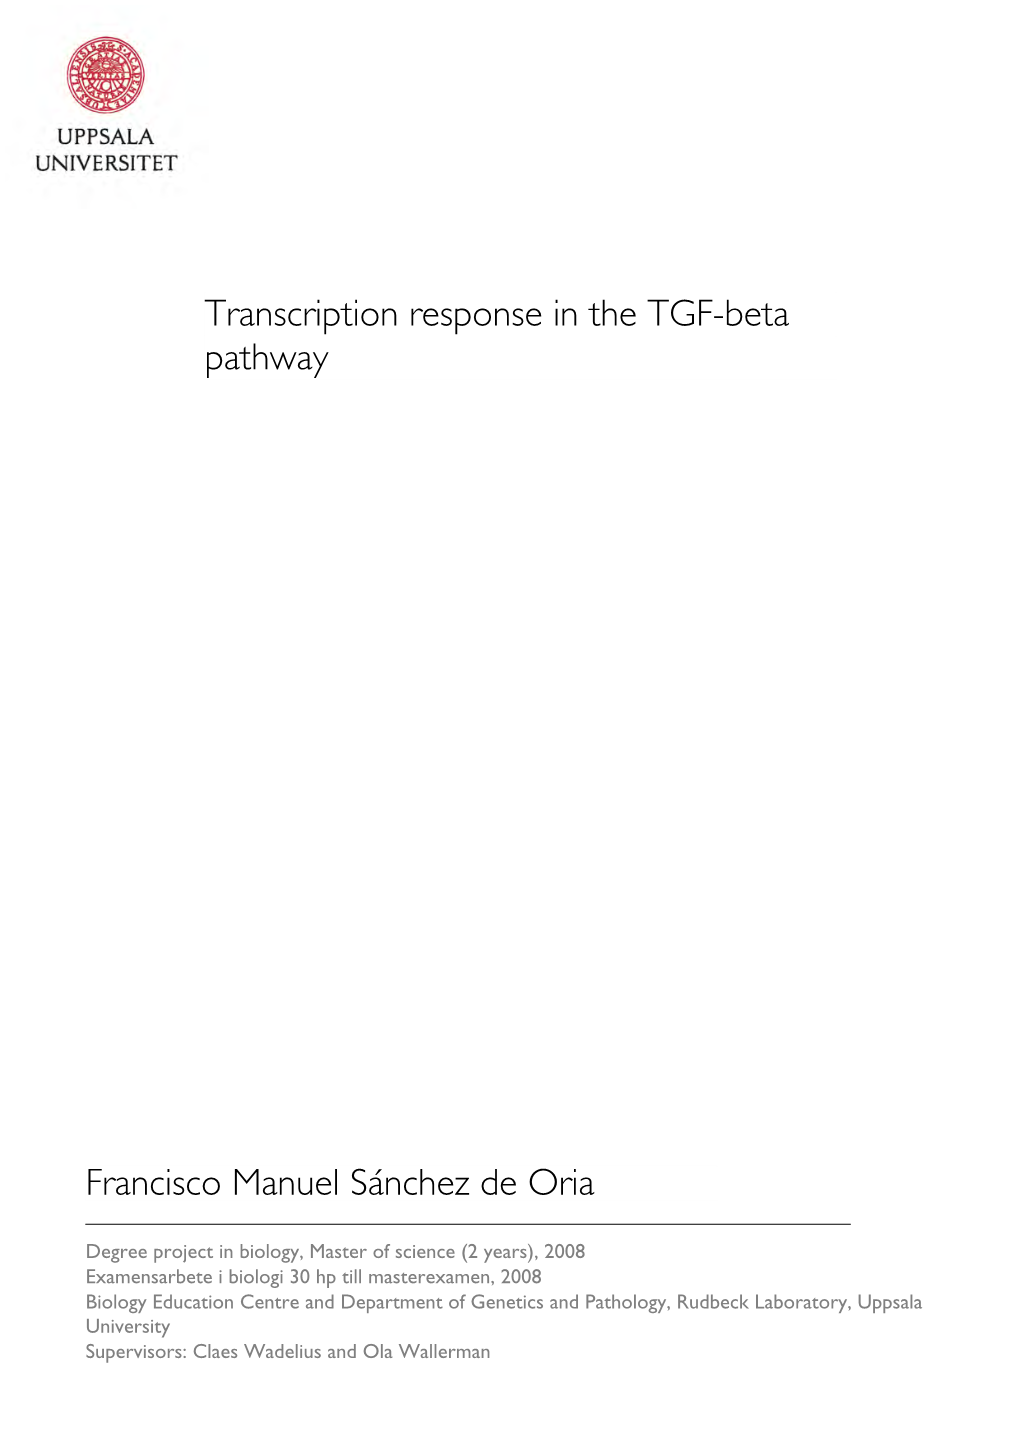 Transcription Response in the TGF-Beta Pathway Francisco